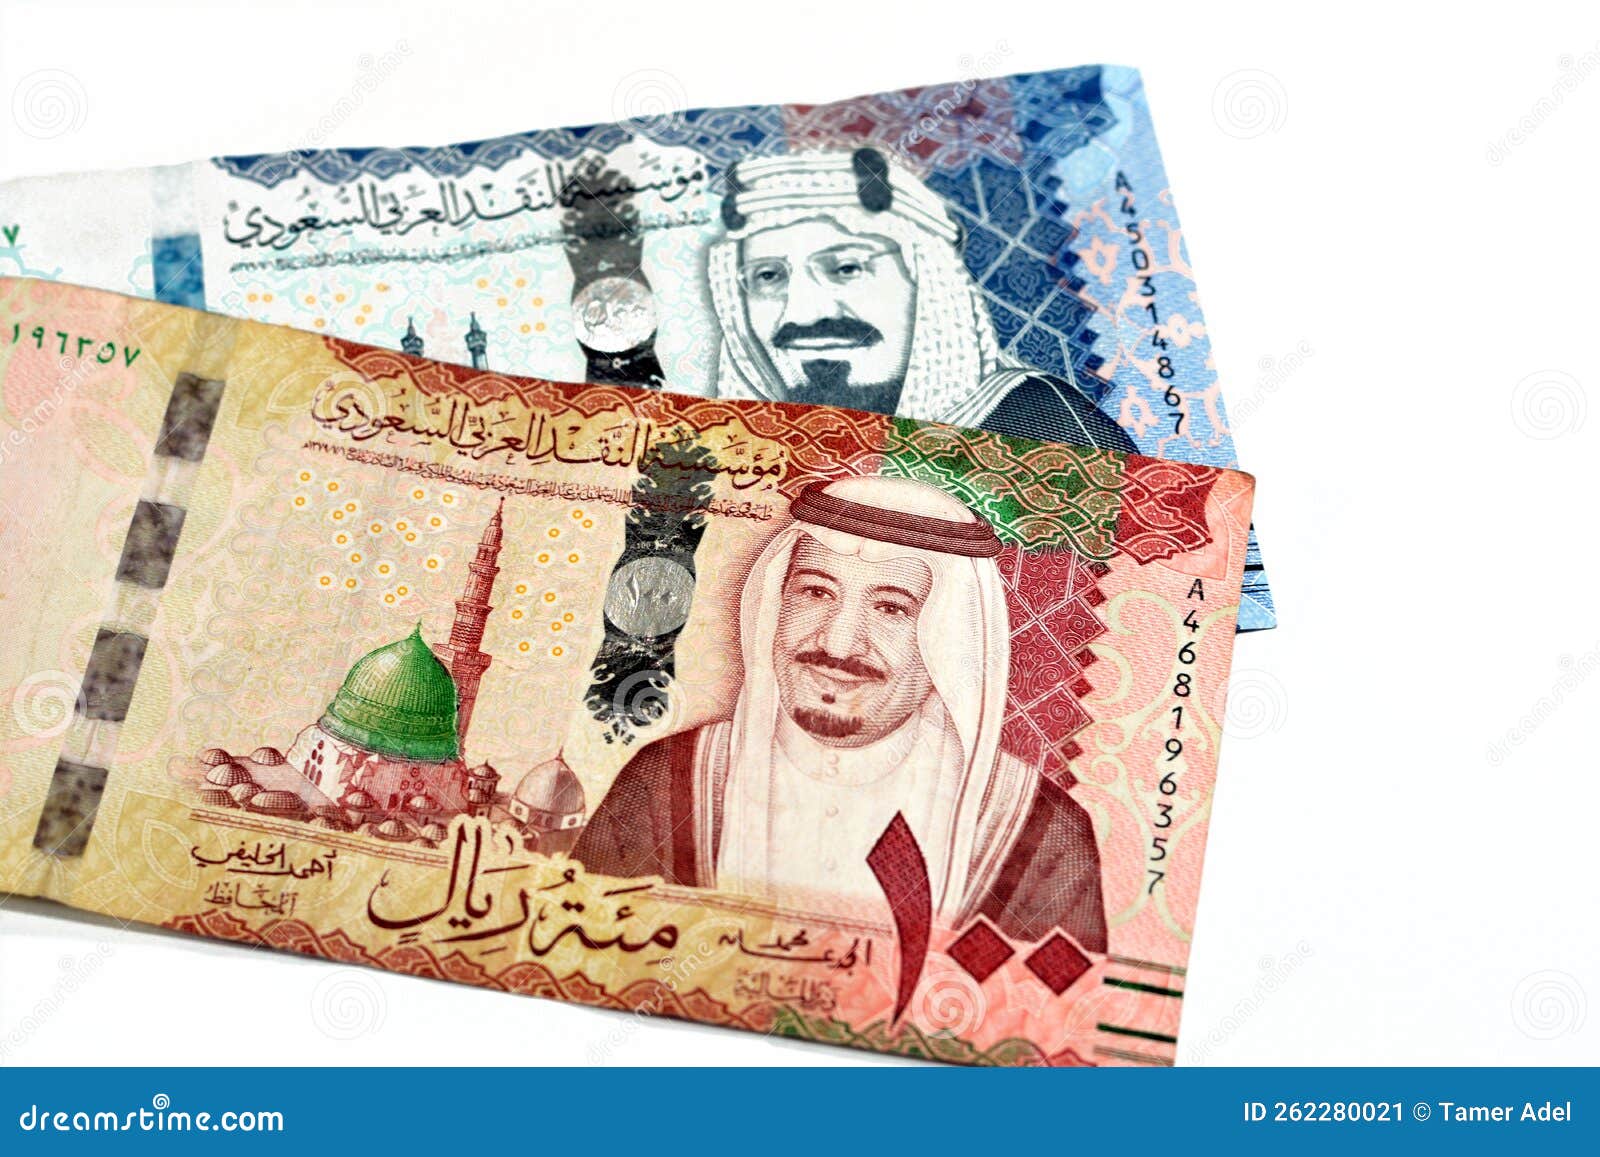 500 sar five hundred saudi arabia riyals cash money with king abdulaziz al saud and kabaa and 100 sar one hundred saudi arabia